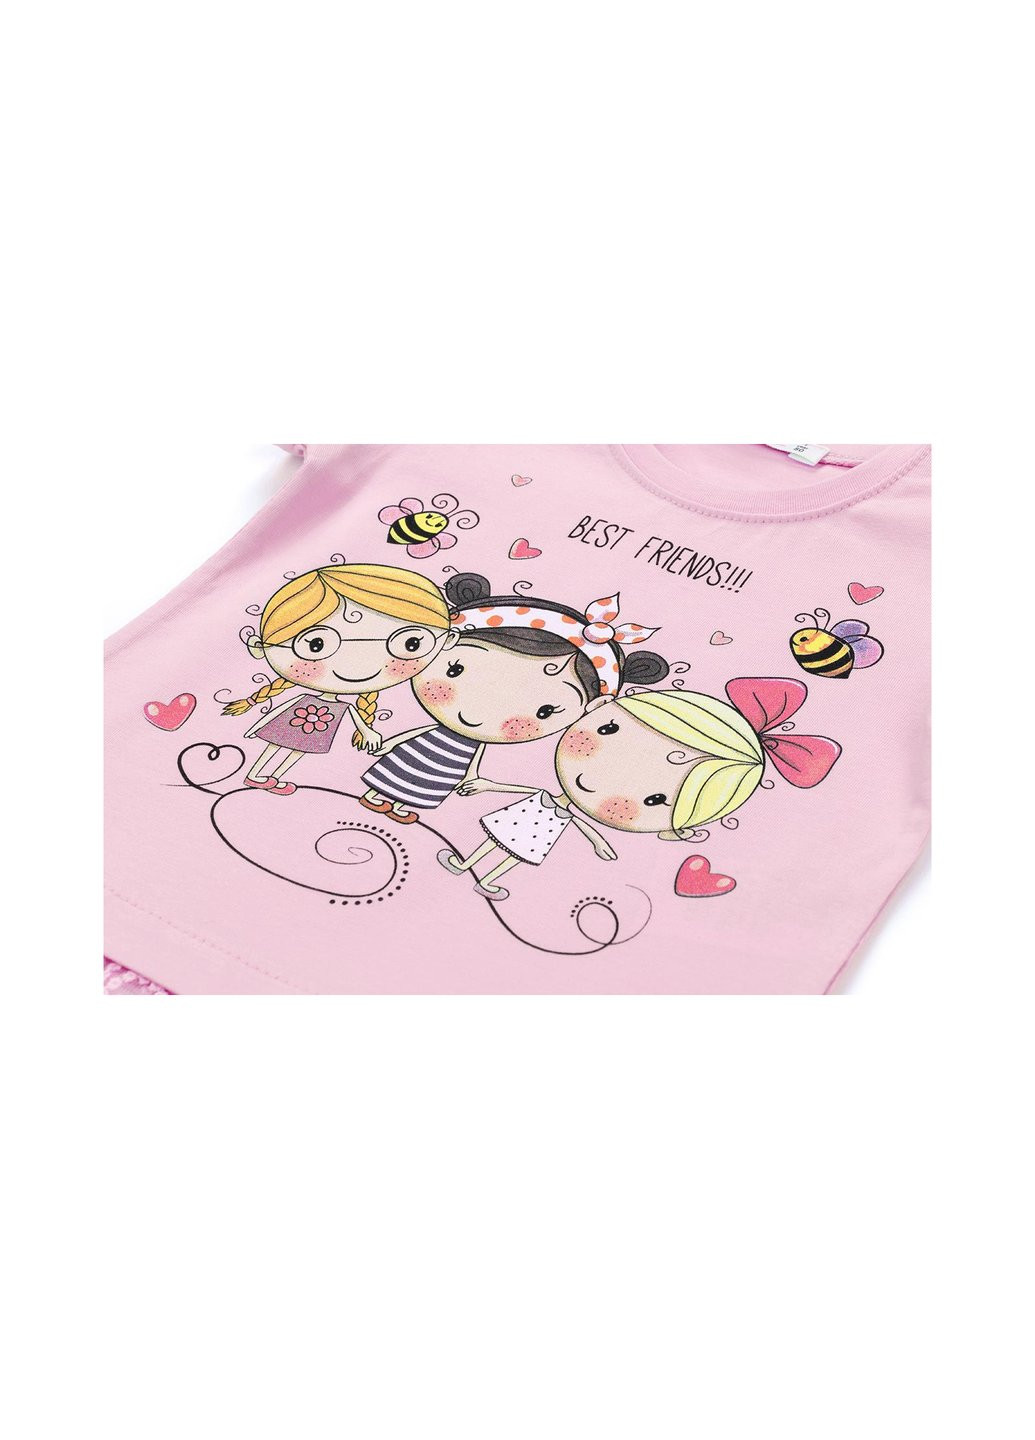 Комбінована футболка дитяча "best frends" (11043-92g-pink) Breeze